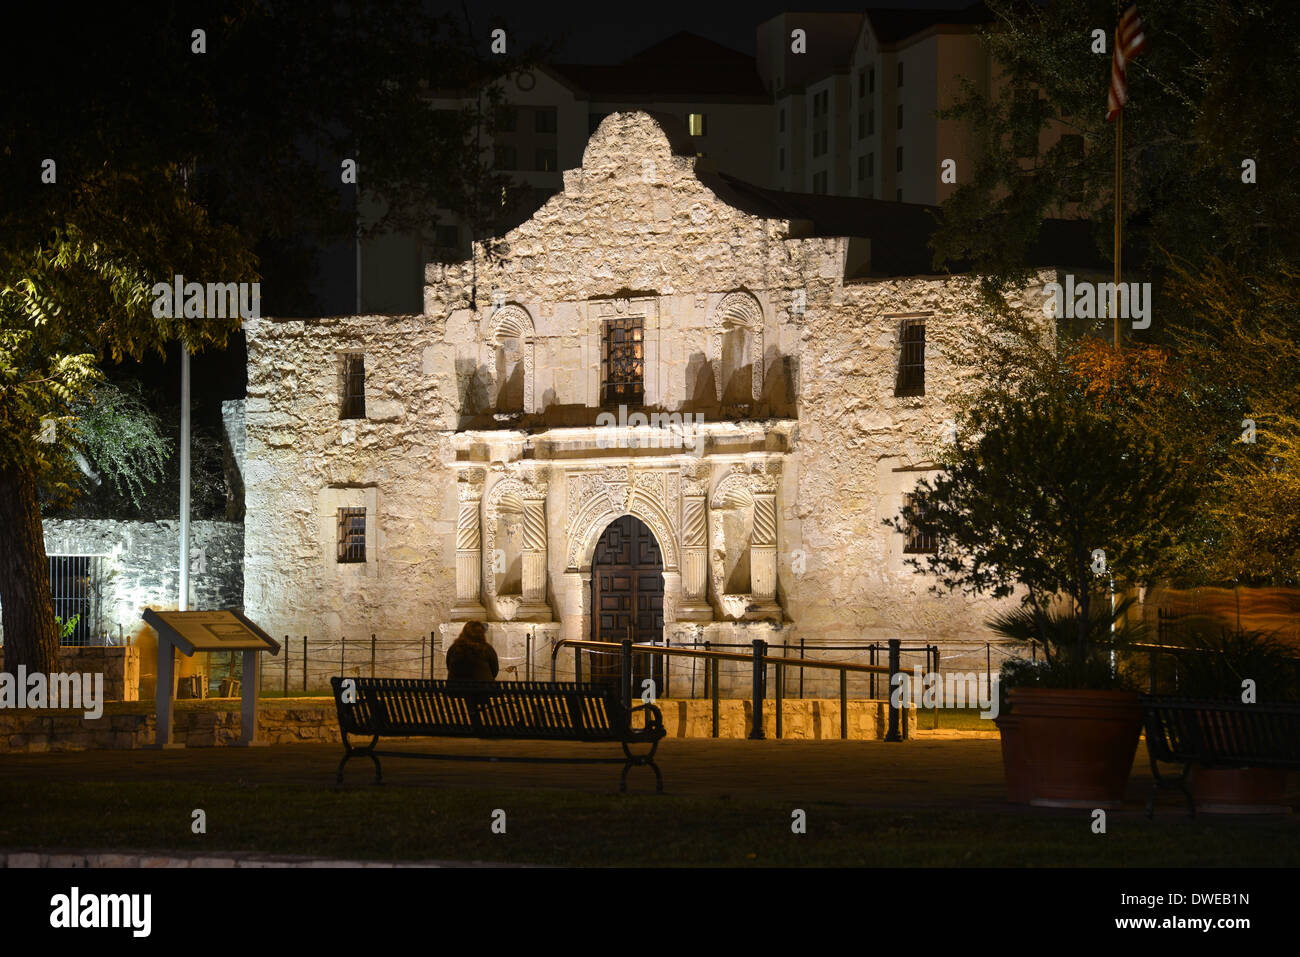 The Historic Alamo In San Antonio Texas Stock Photo Alamy